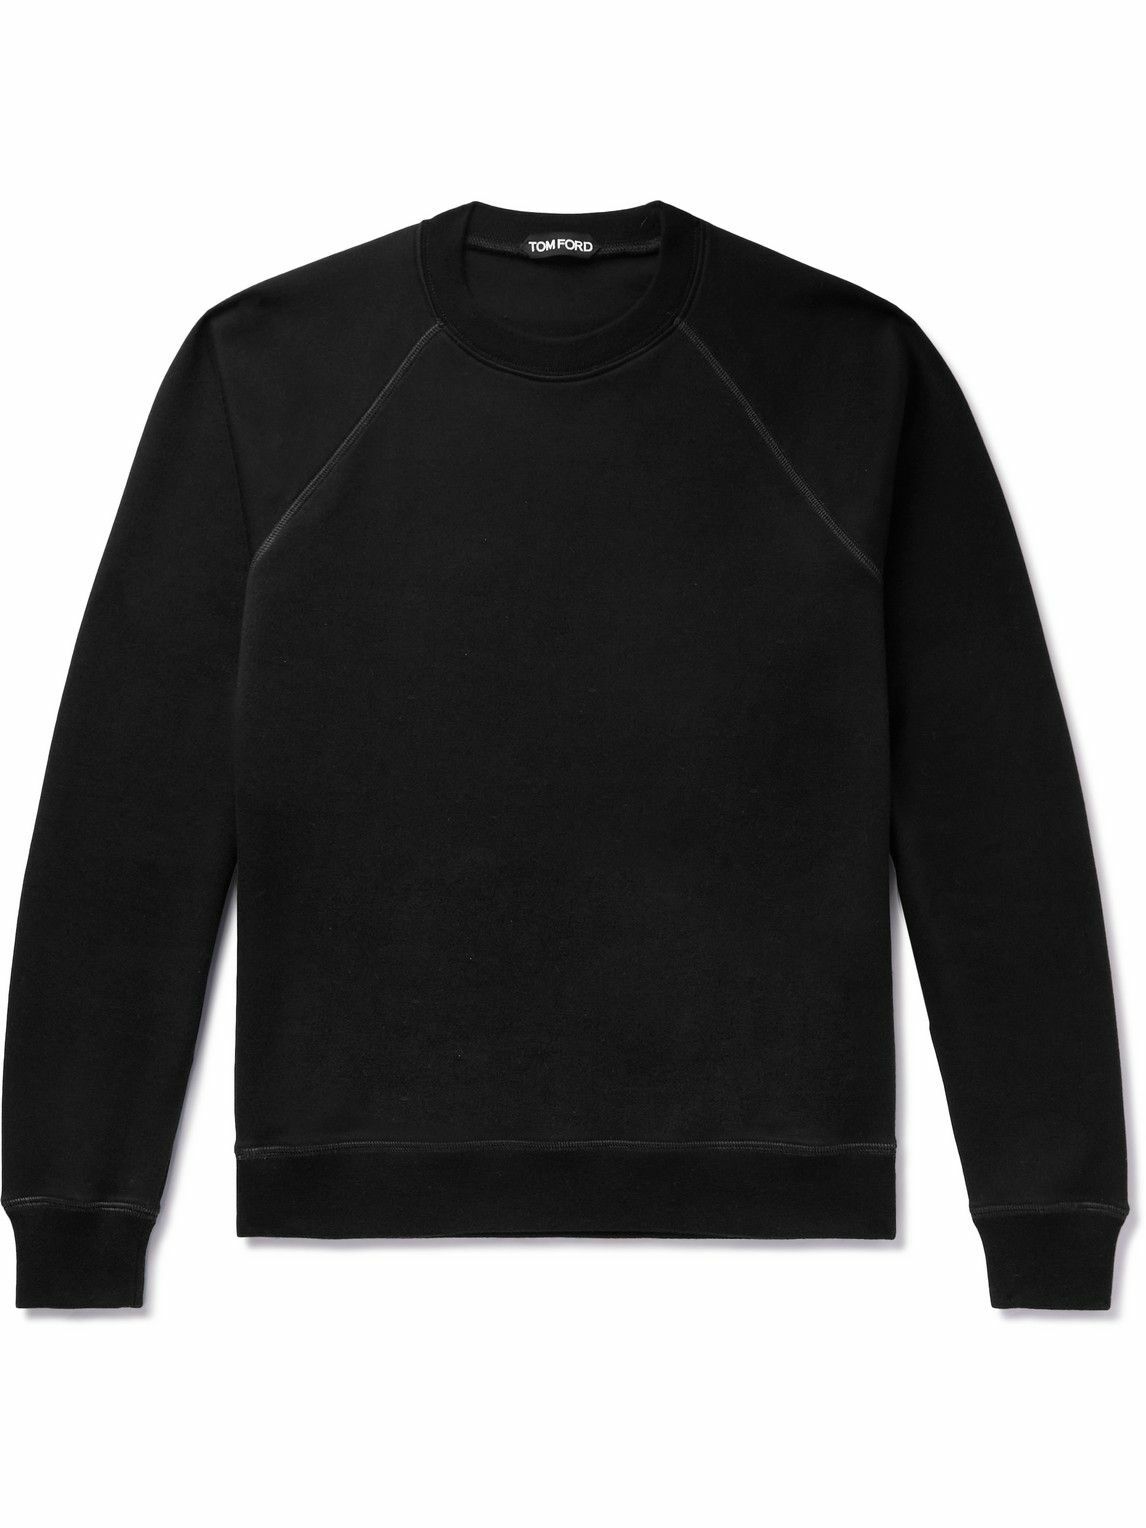 TOM FORD - Cotton-Jersey Sweatshirt - Black TOM FORD